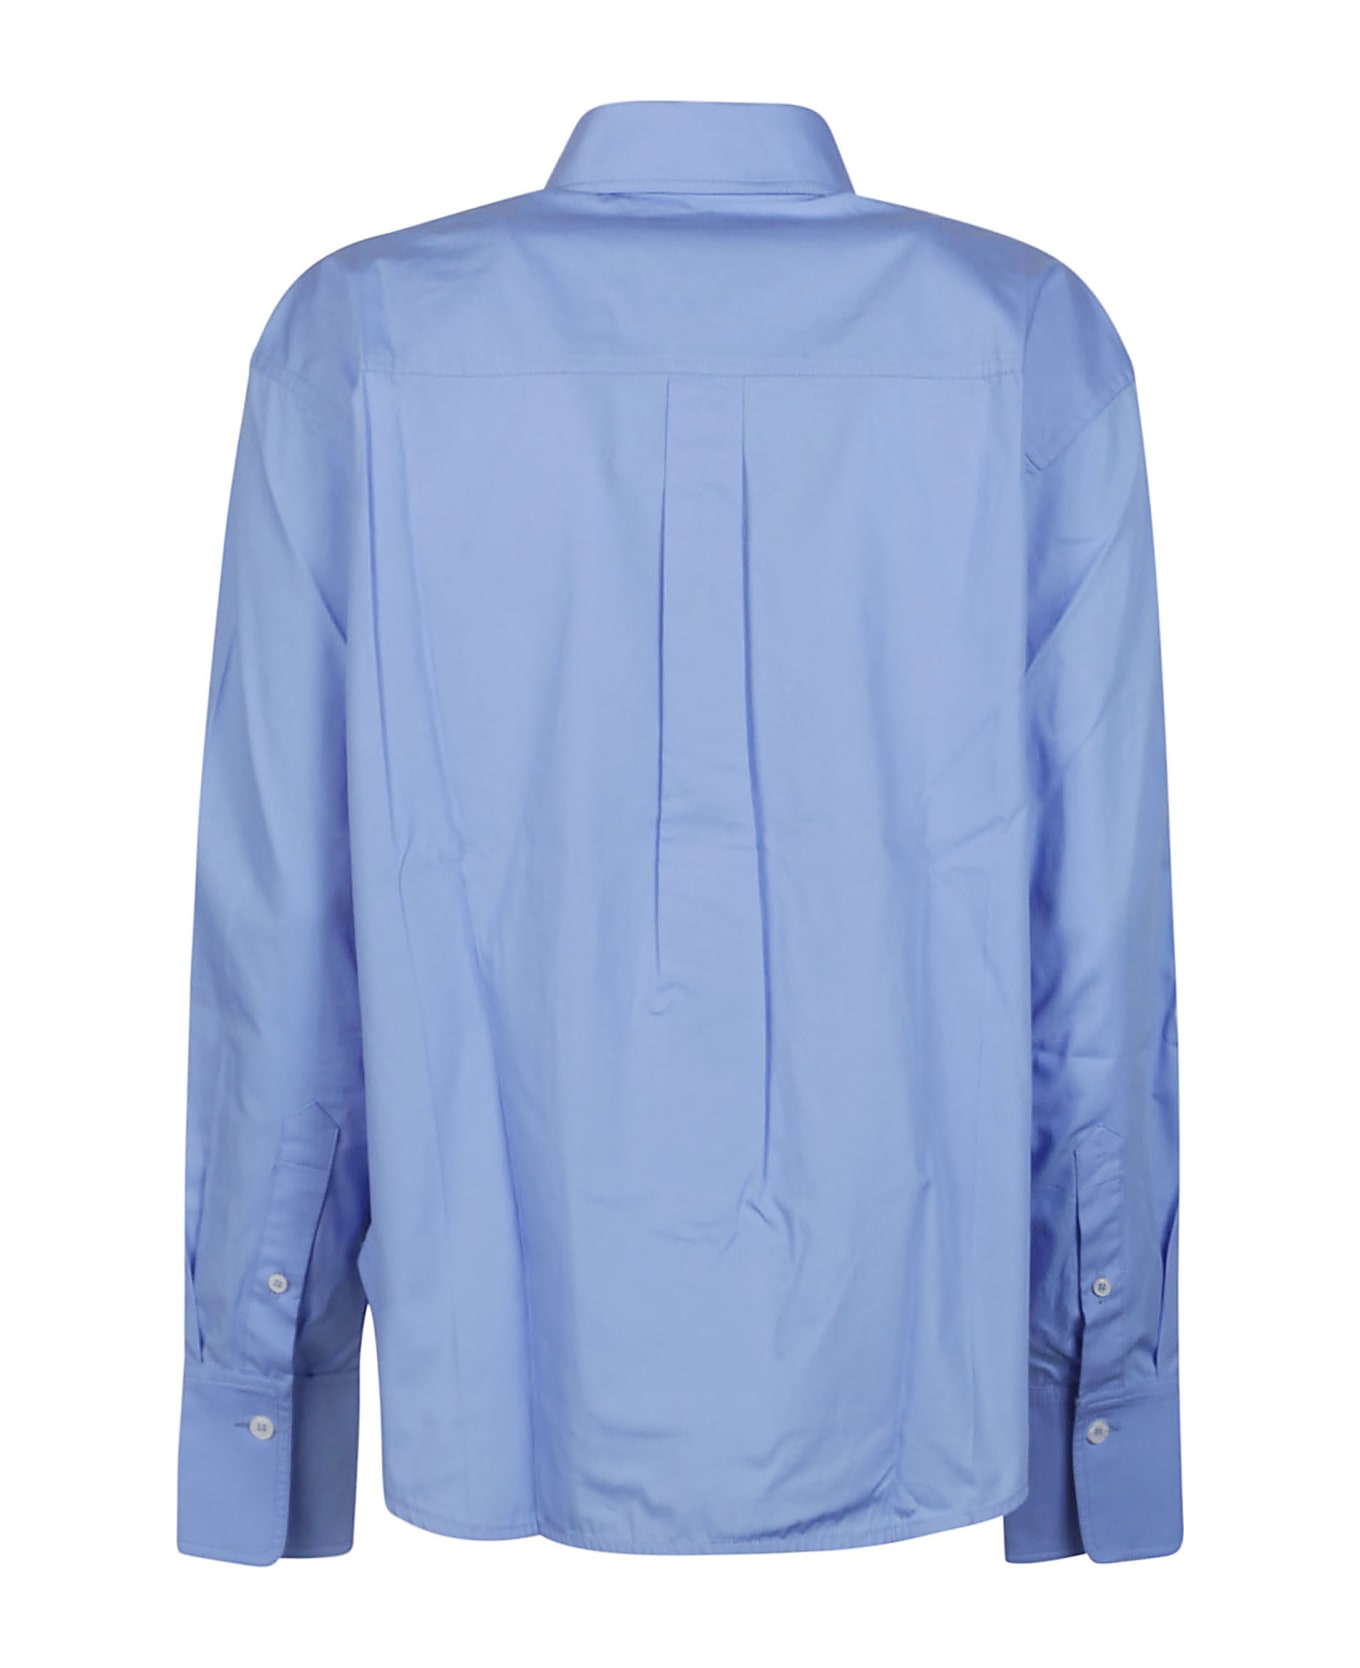 Victoria Beckham Cropped Long Sleeve Shirt - Oxford Blue シャツ